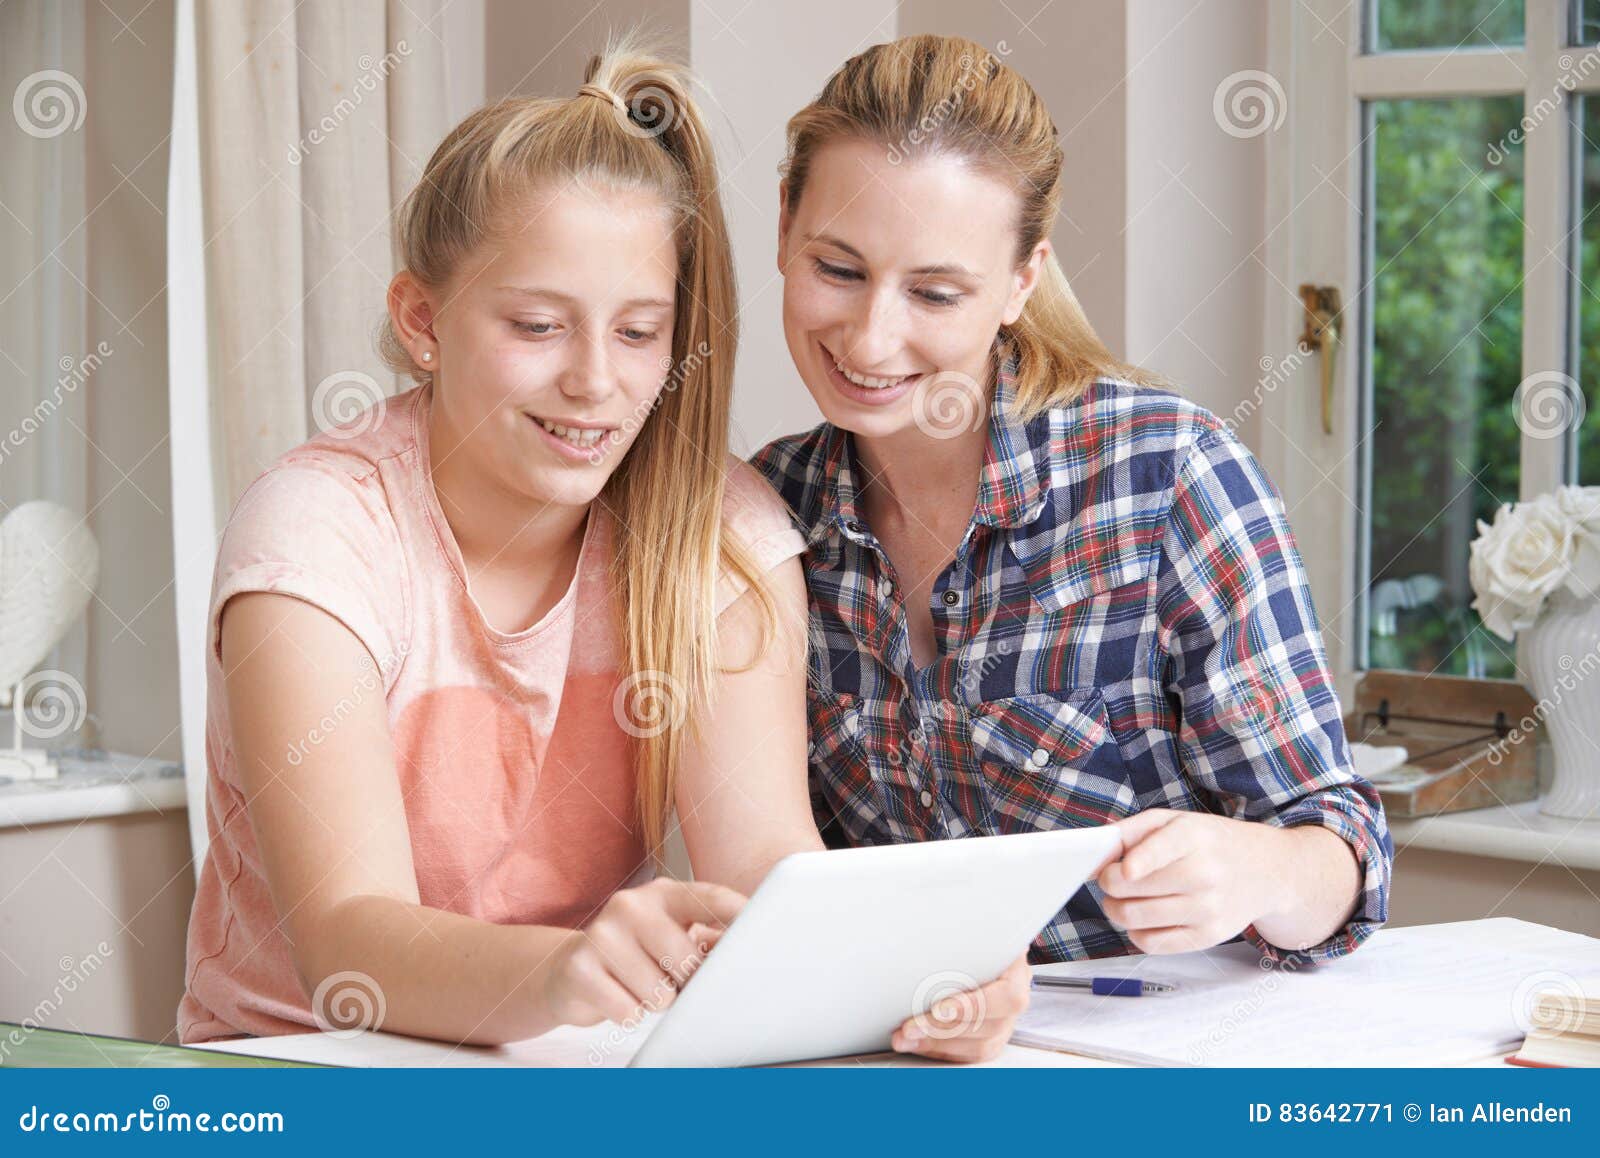 female home tutor helping girl with studies using digital tablet